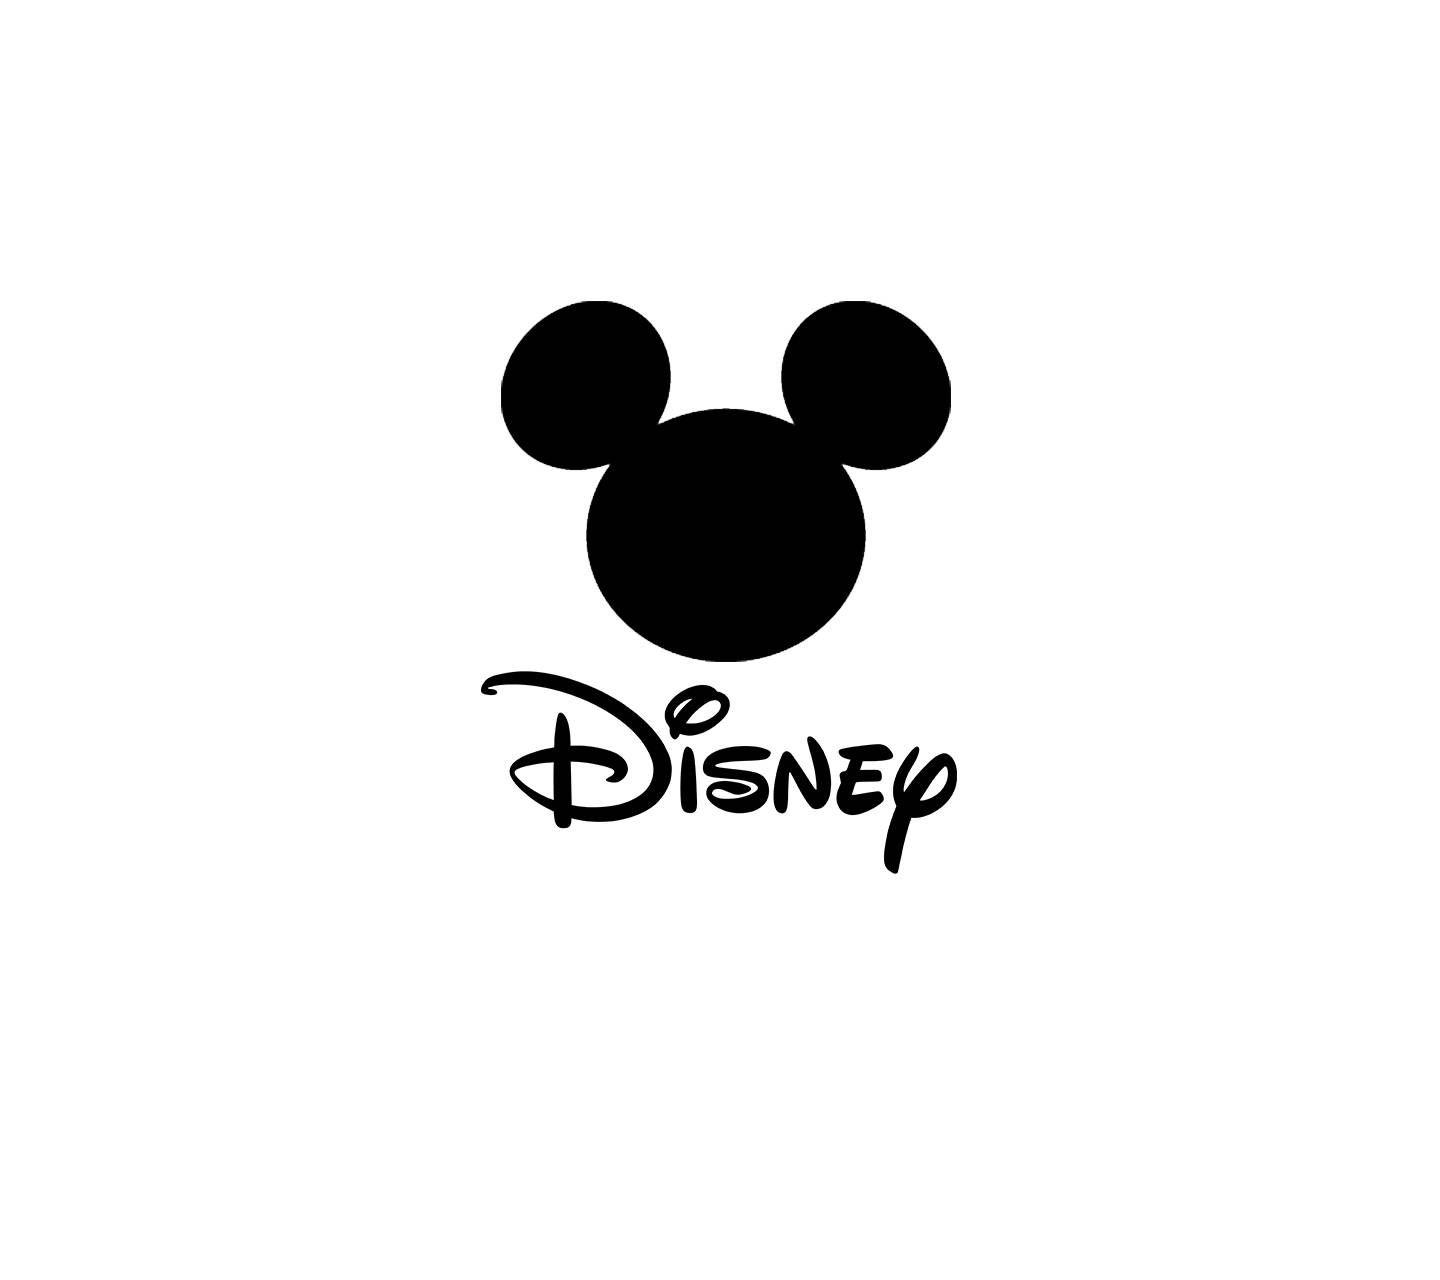 Diney Logo - Disney Logo White Wallpaper by NeoMystic - 17 - Free on ZEDGE™